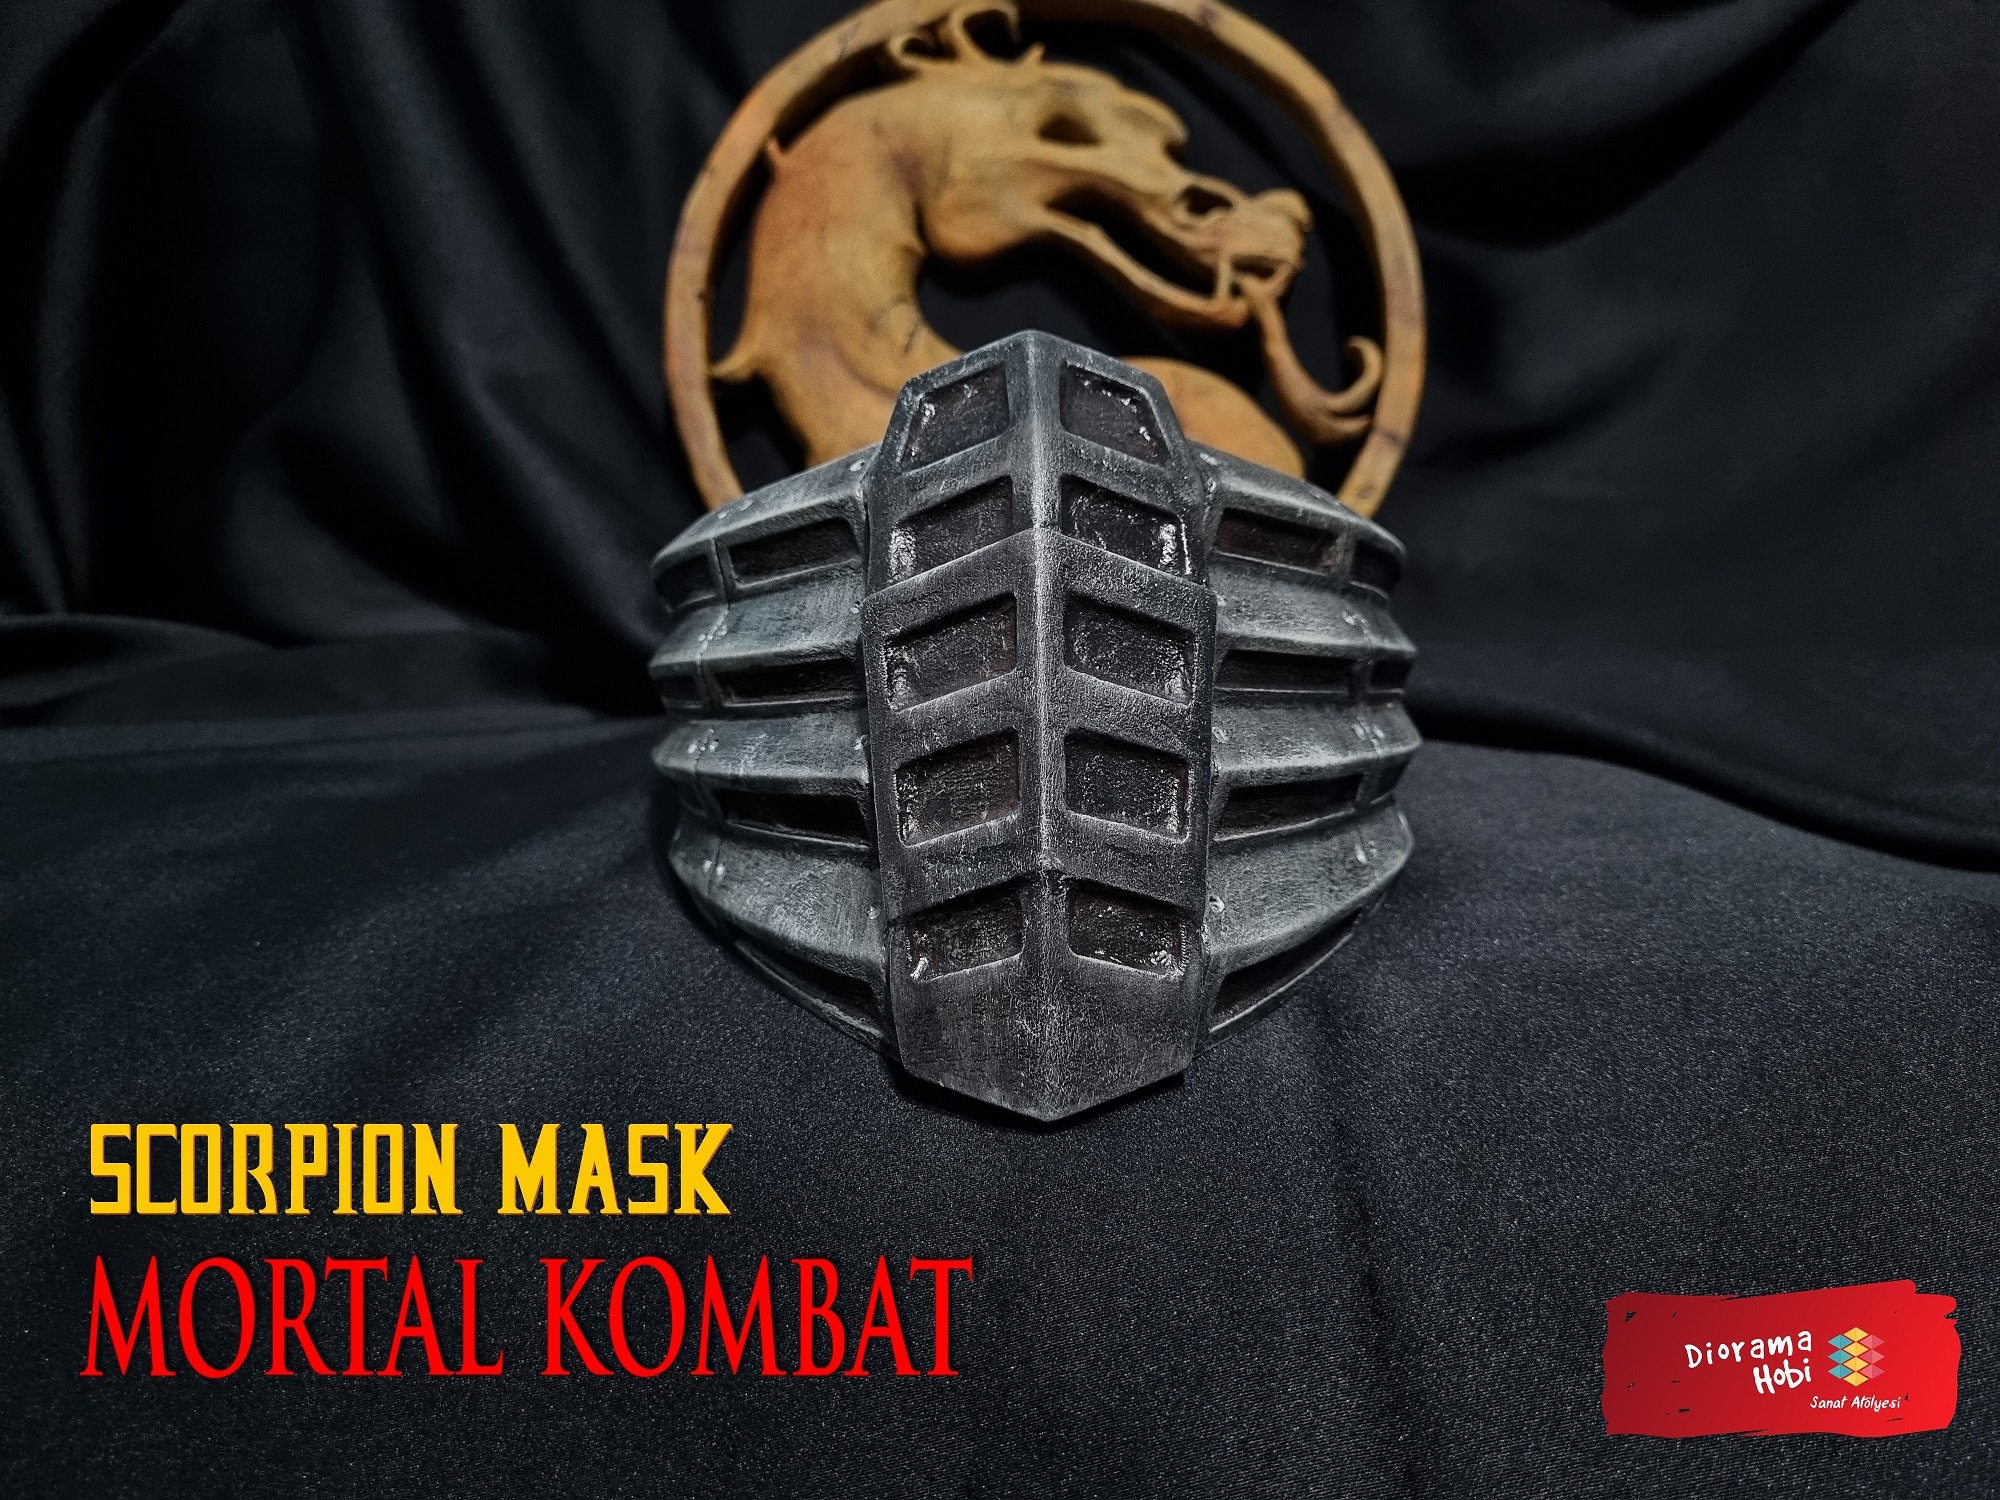 Mortal Kombat Scorpion Mask from the 1995 Movie - Etsy